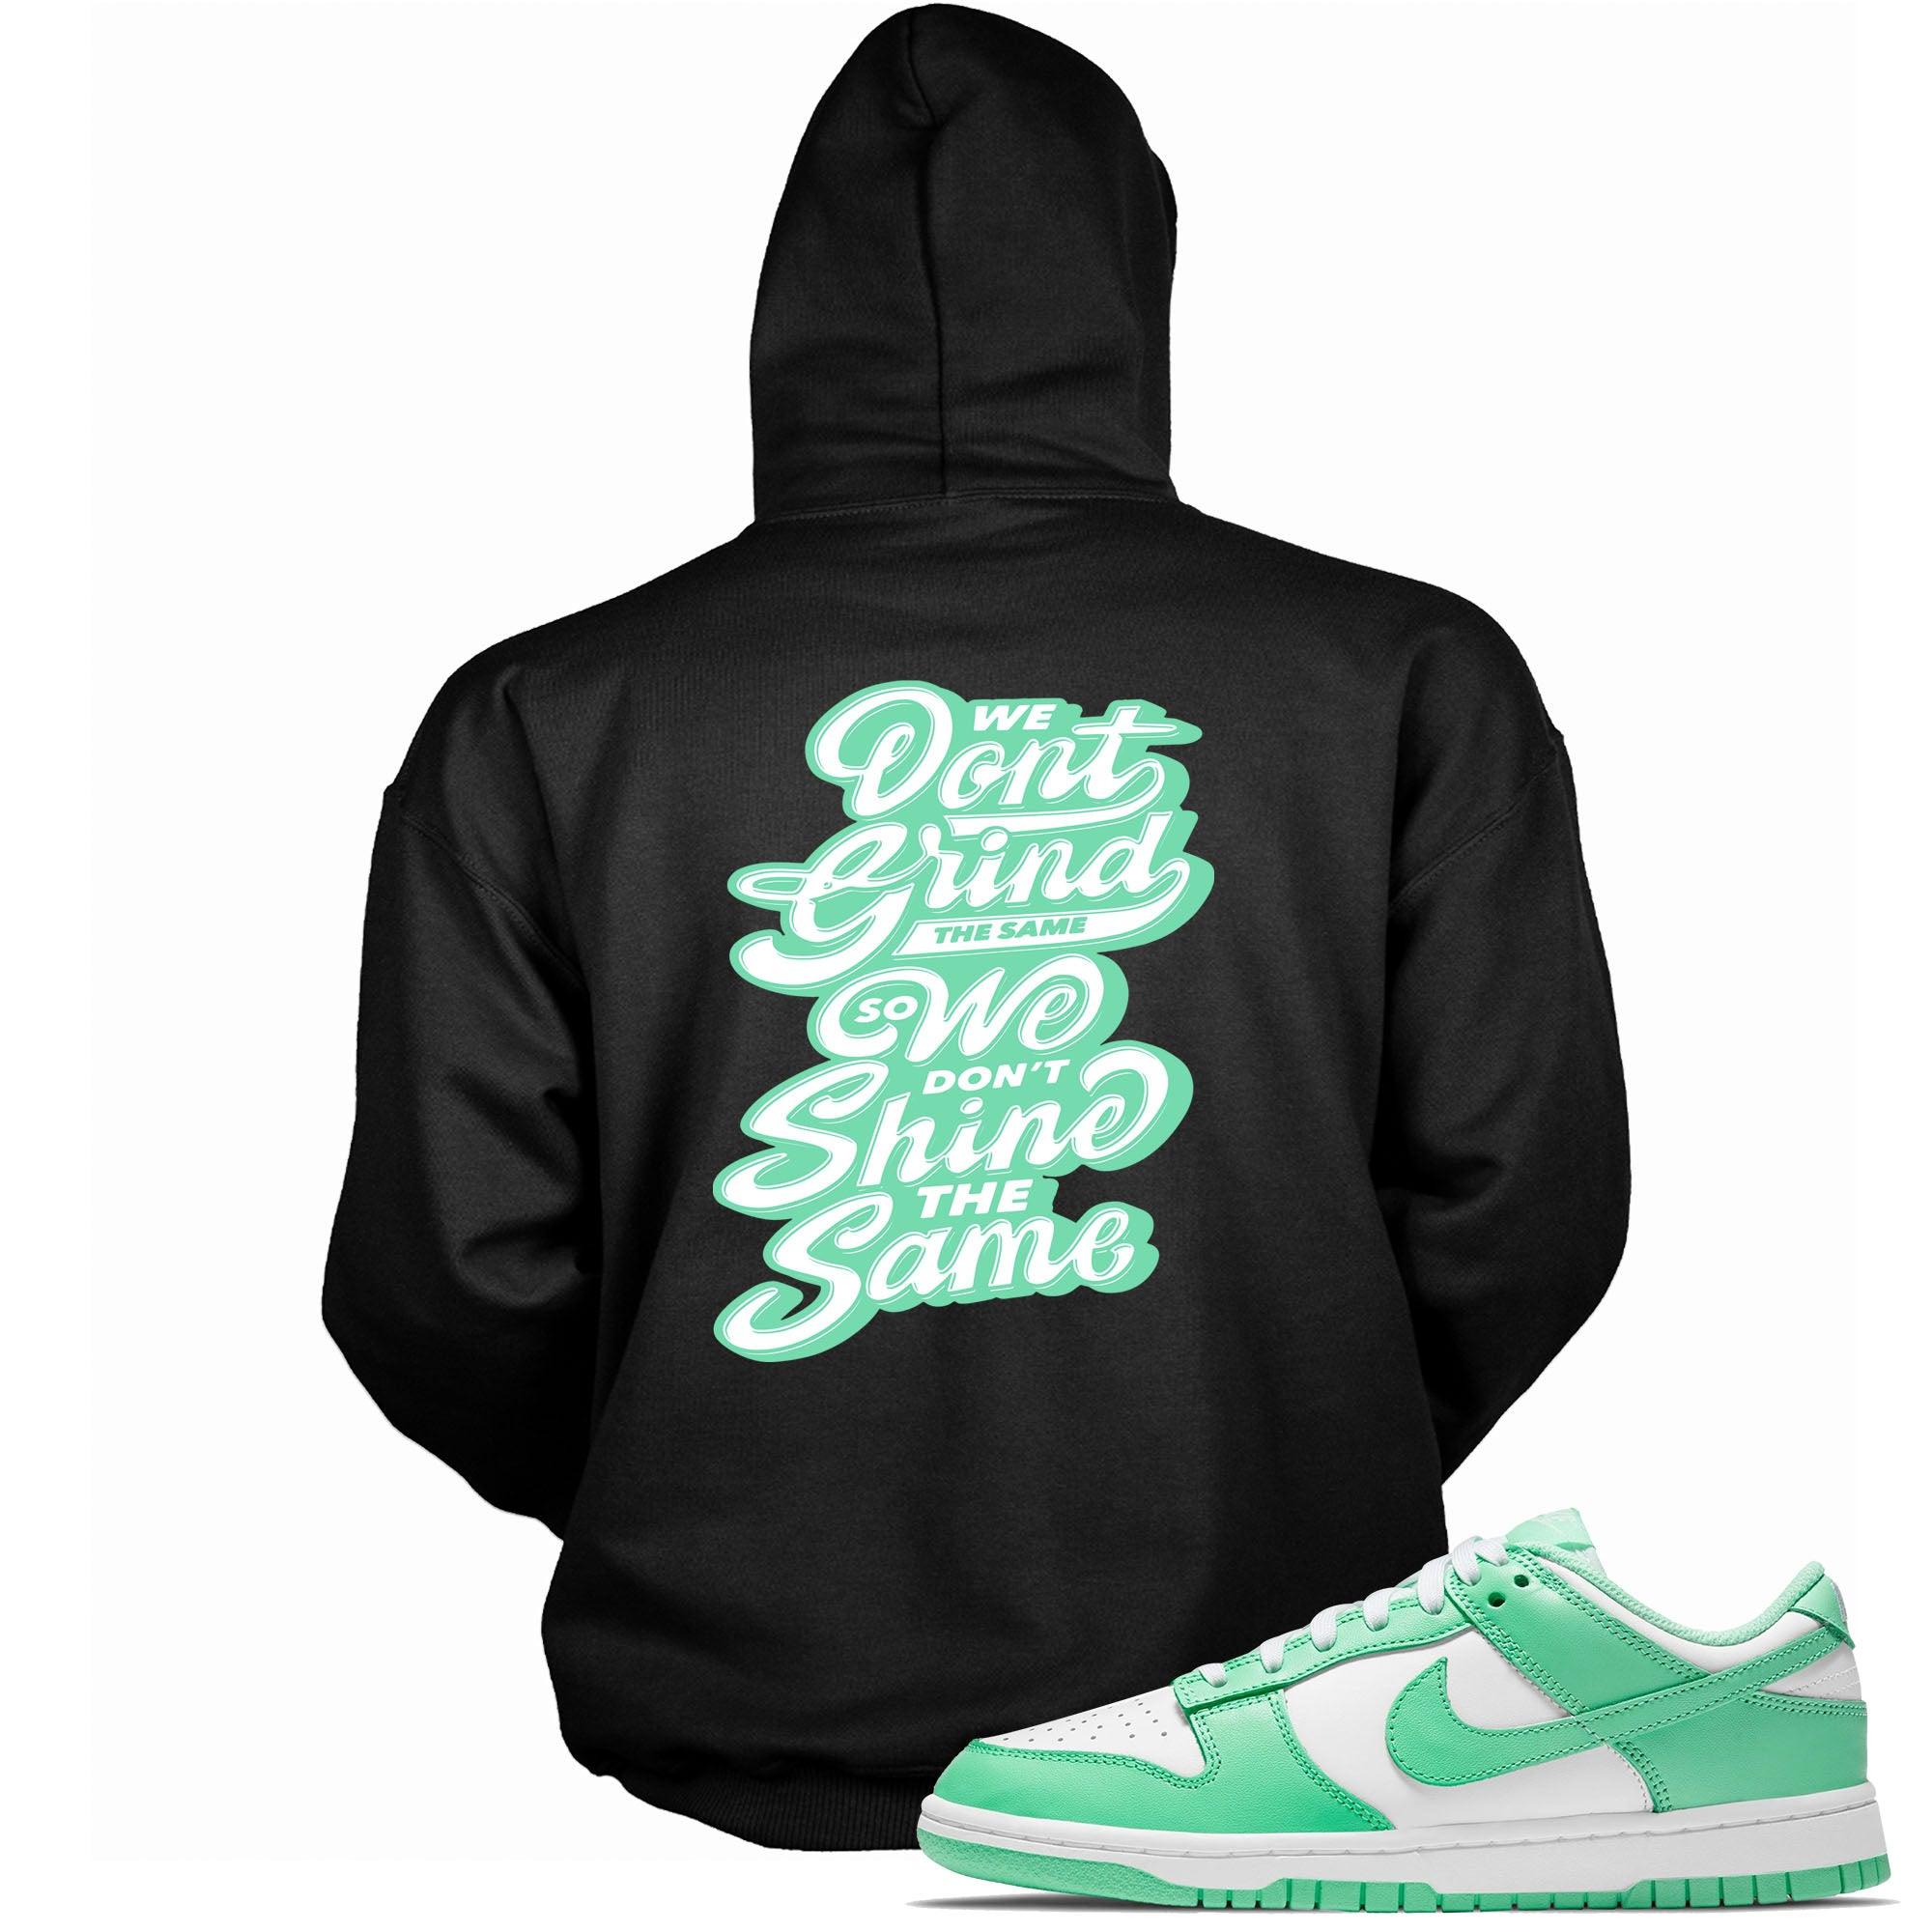 Black We Don't Grind Hoodie Nike Dunks Low Green Glow photo